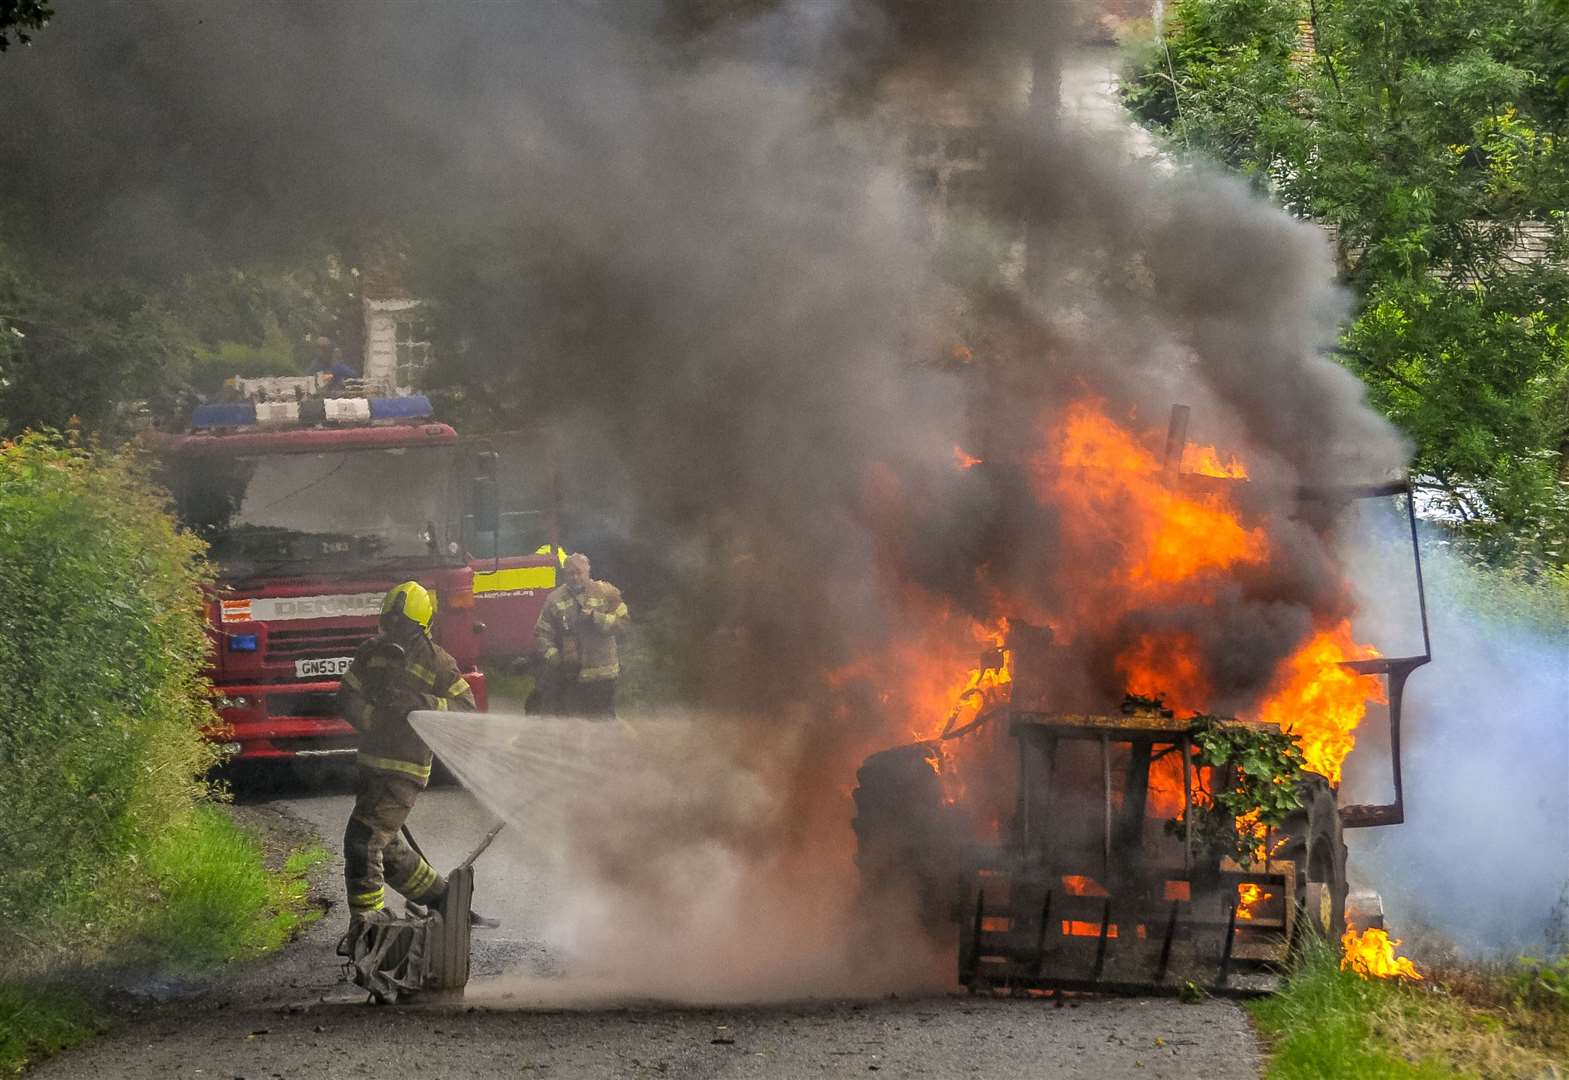 A brave firefighter close to danger. Picture Chris Lawson - Lawsonpics.com